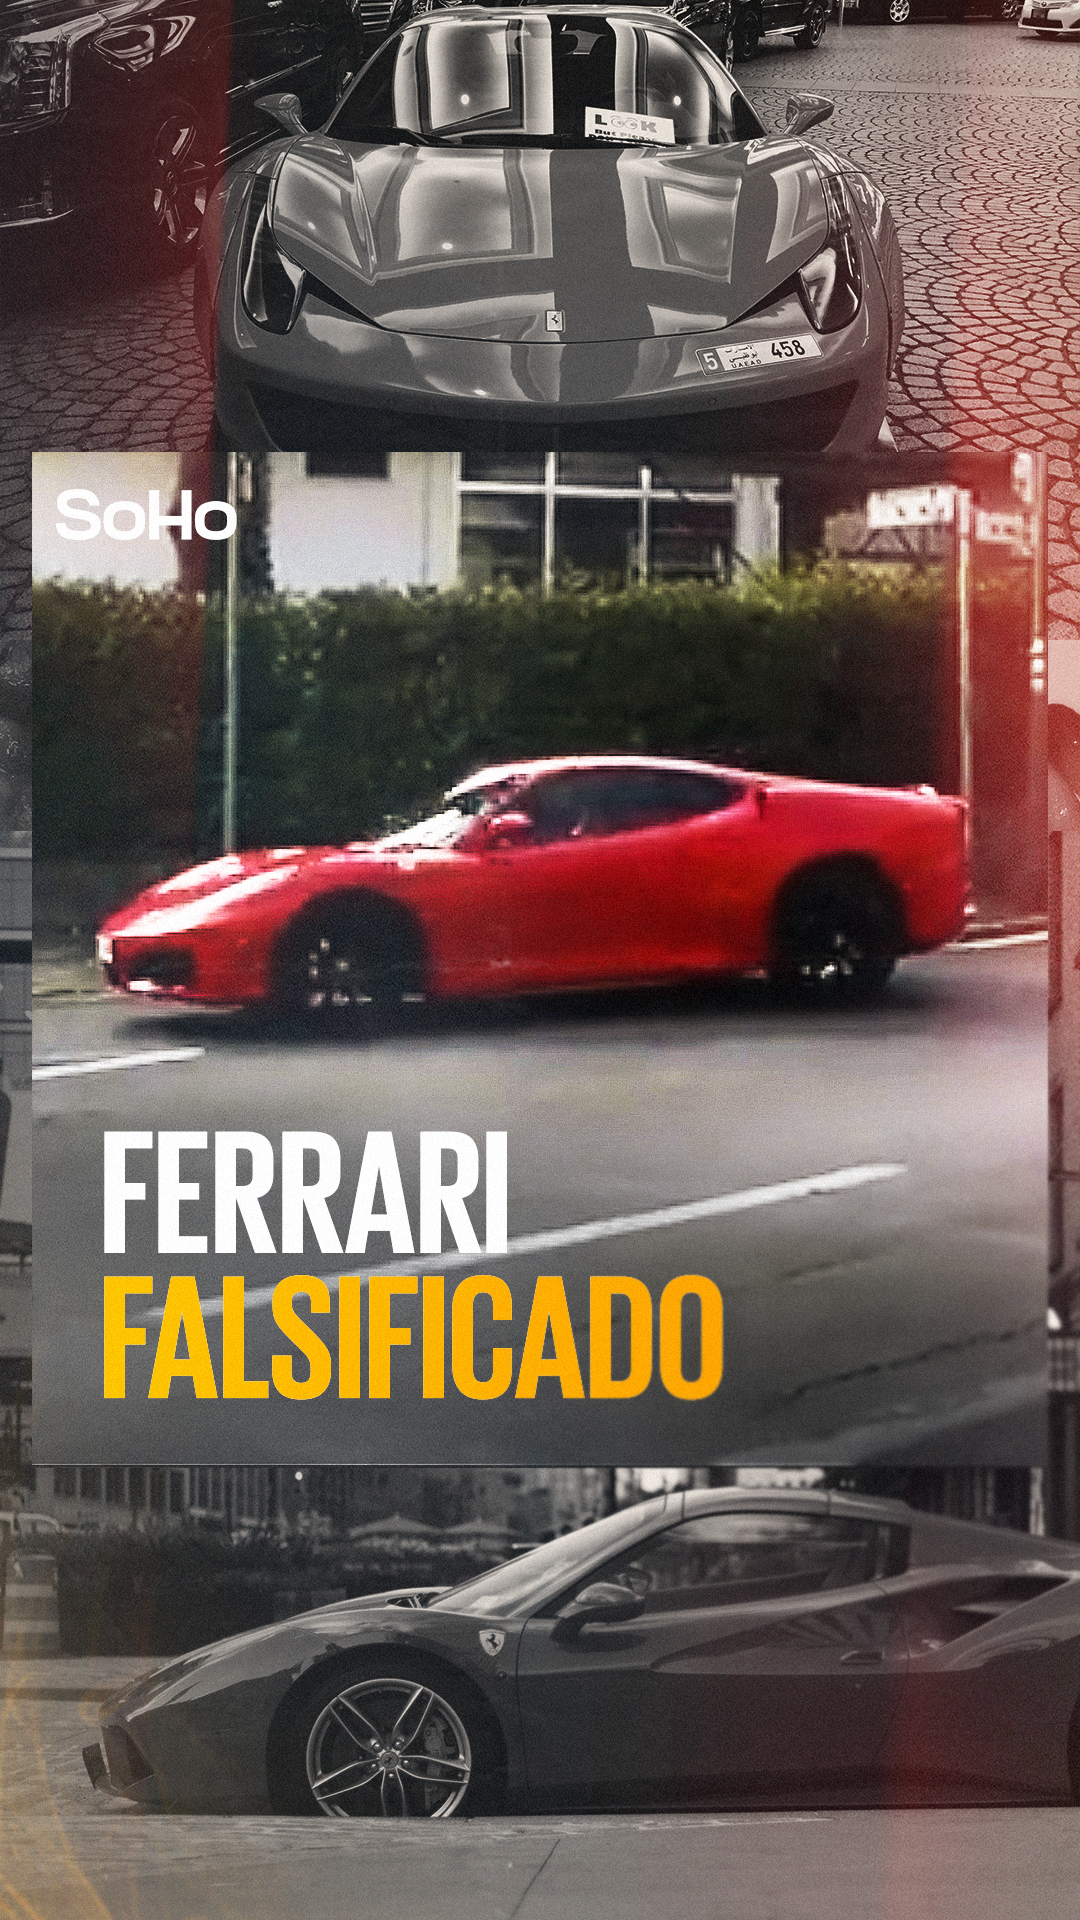 Ferrari falsificado